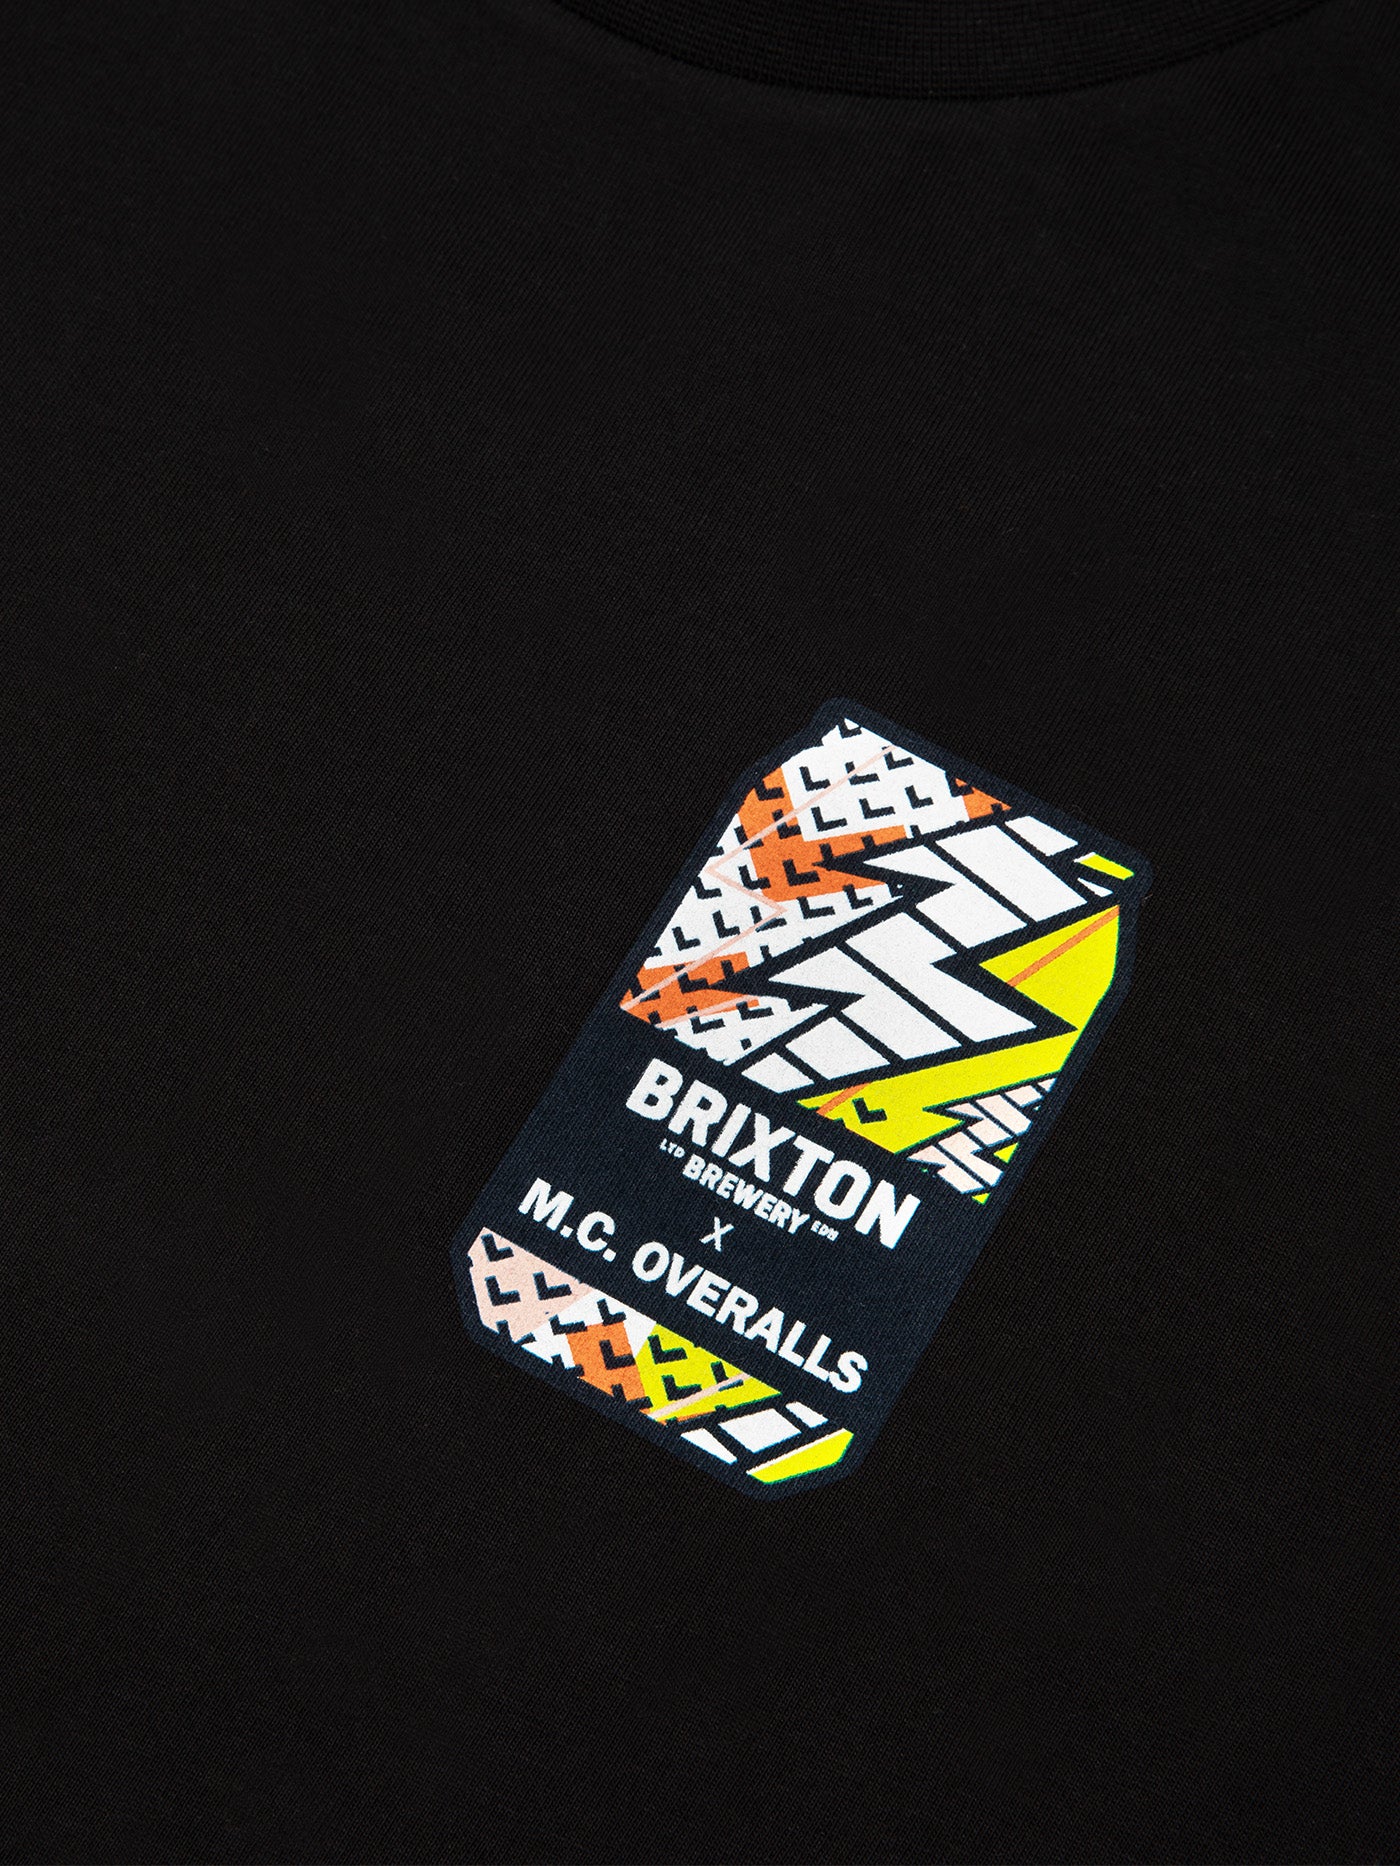 Brixton Brewery x M.C.Overalls T-Shirt Black